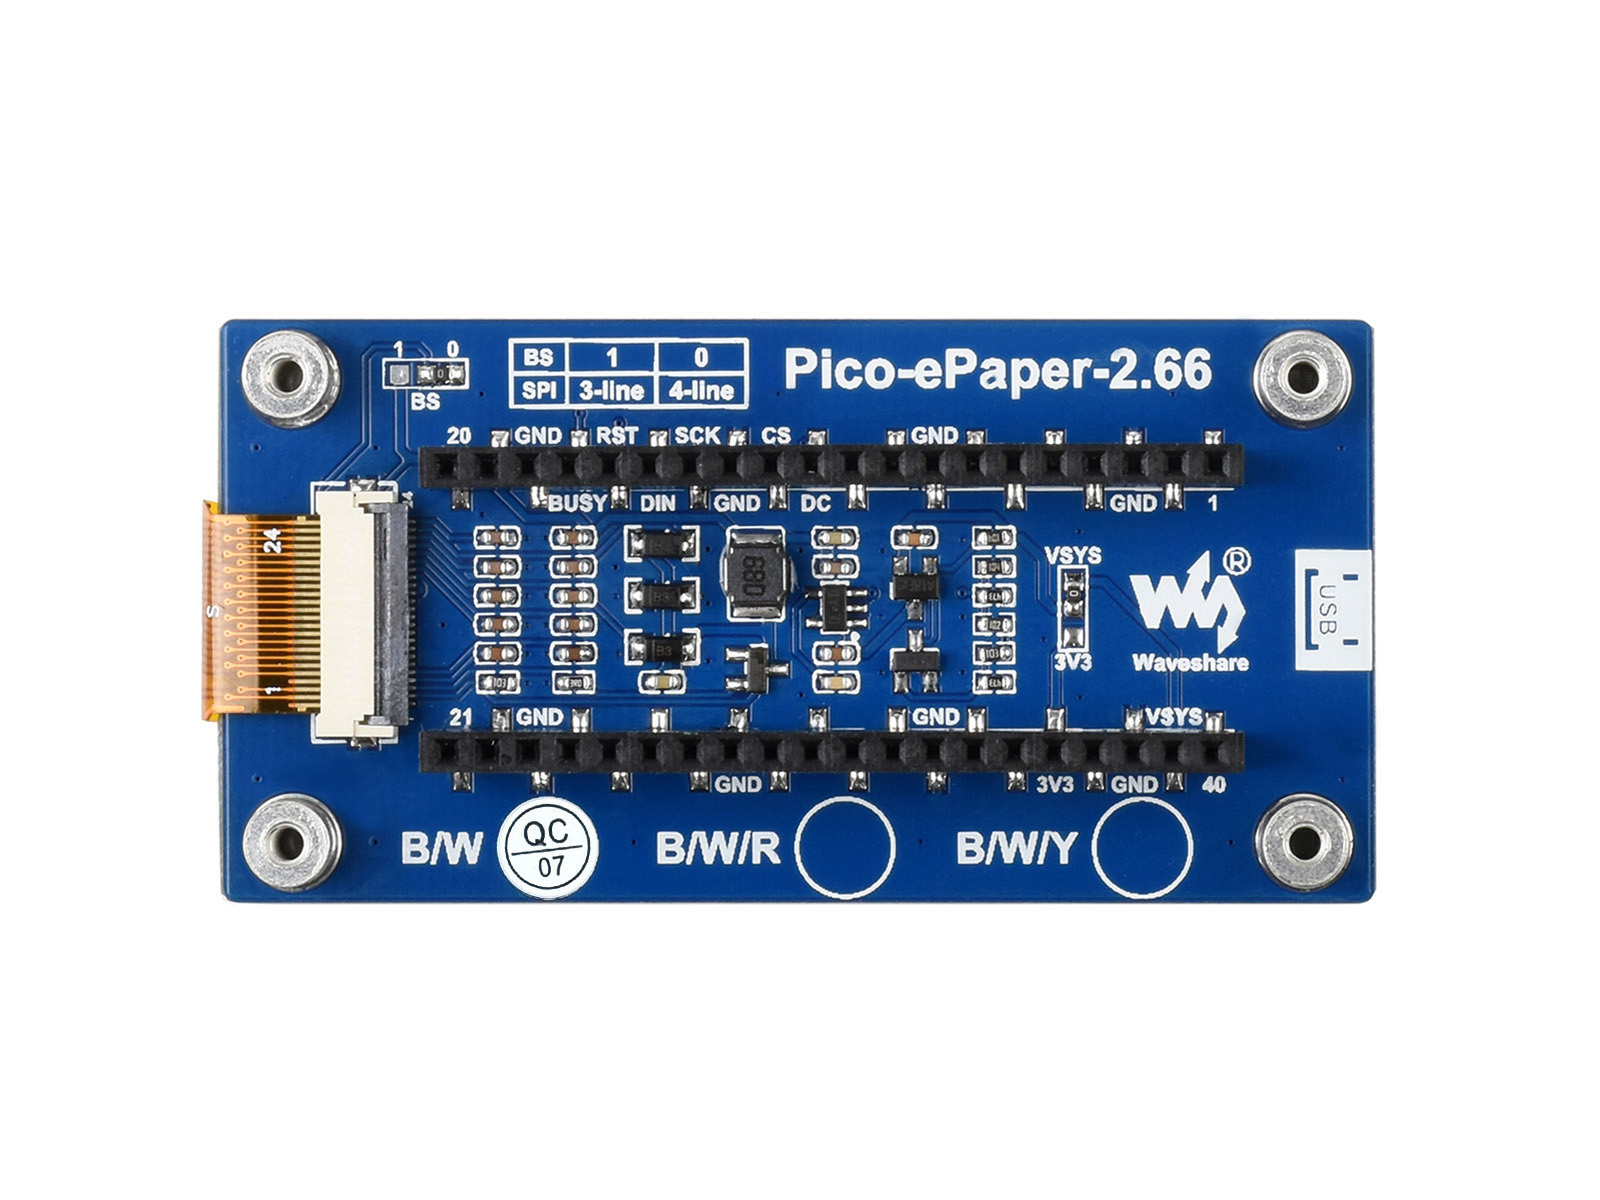 2.66inch E-Paper E-Ink Display Module for Raspberry Pi Pico, 296*152, Black / White, SPI